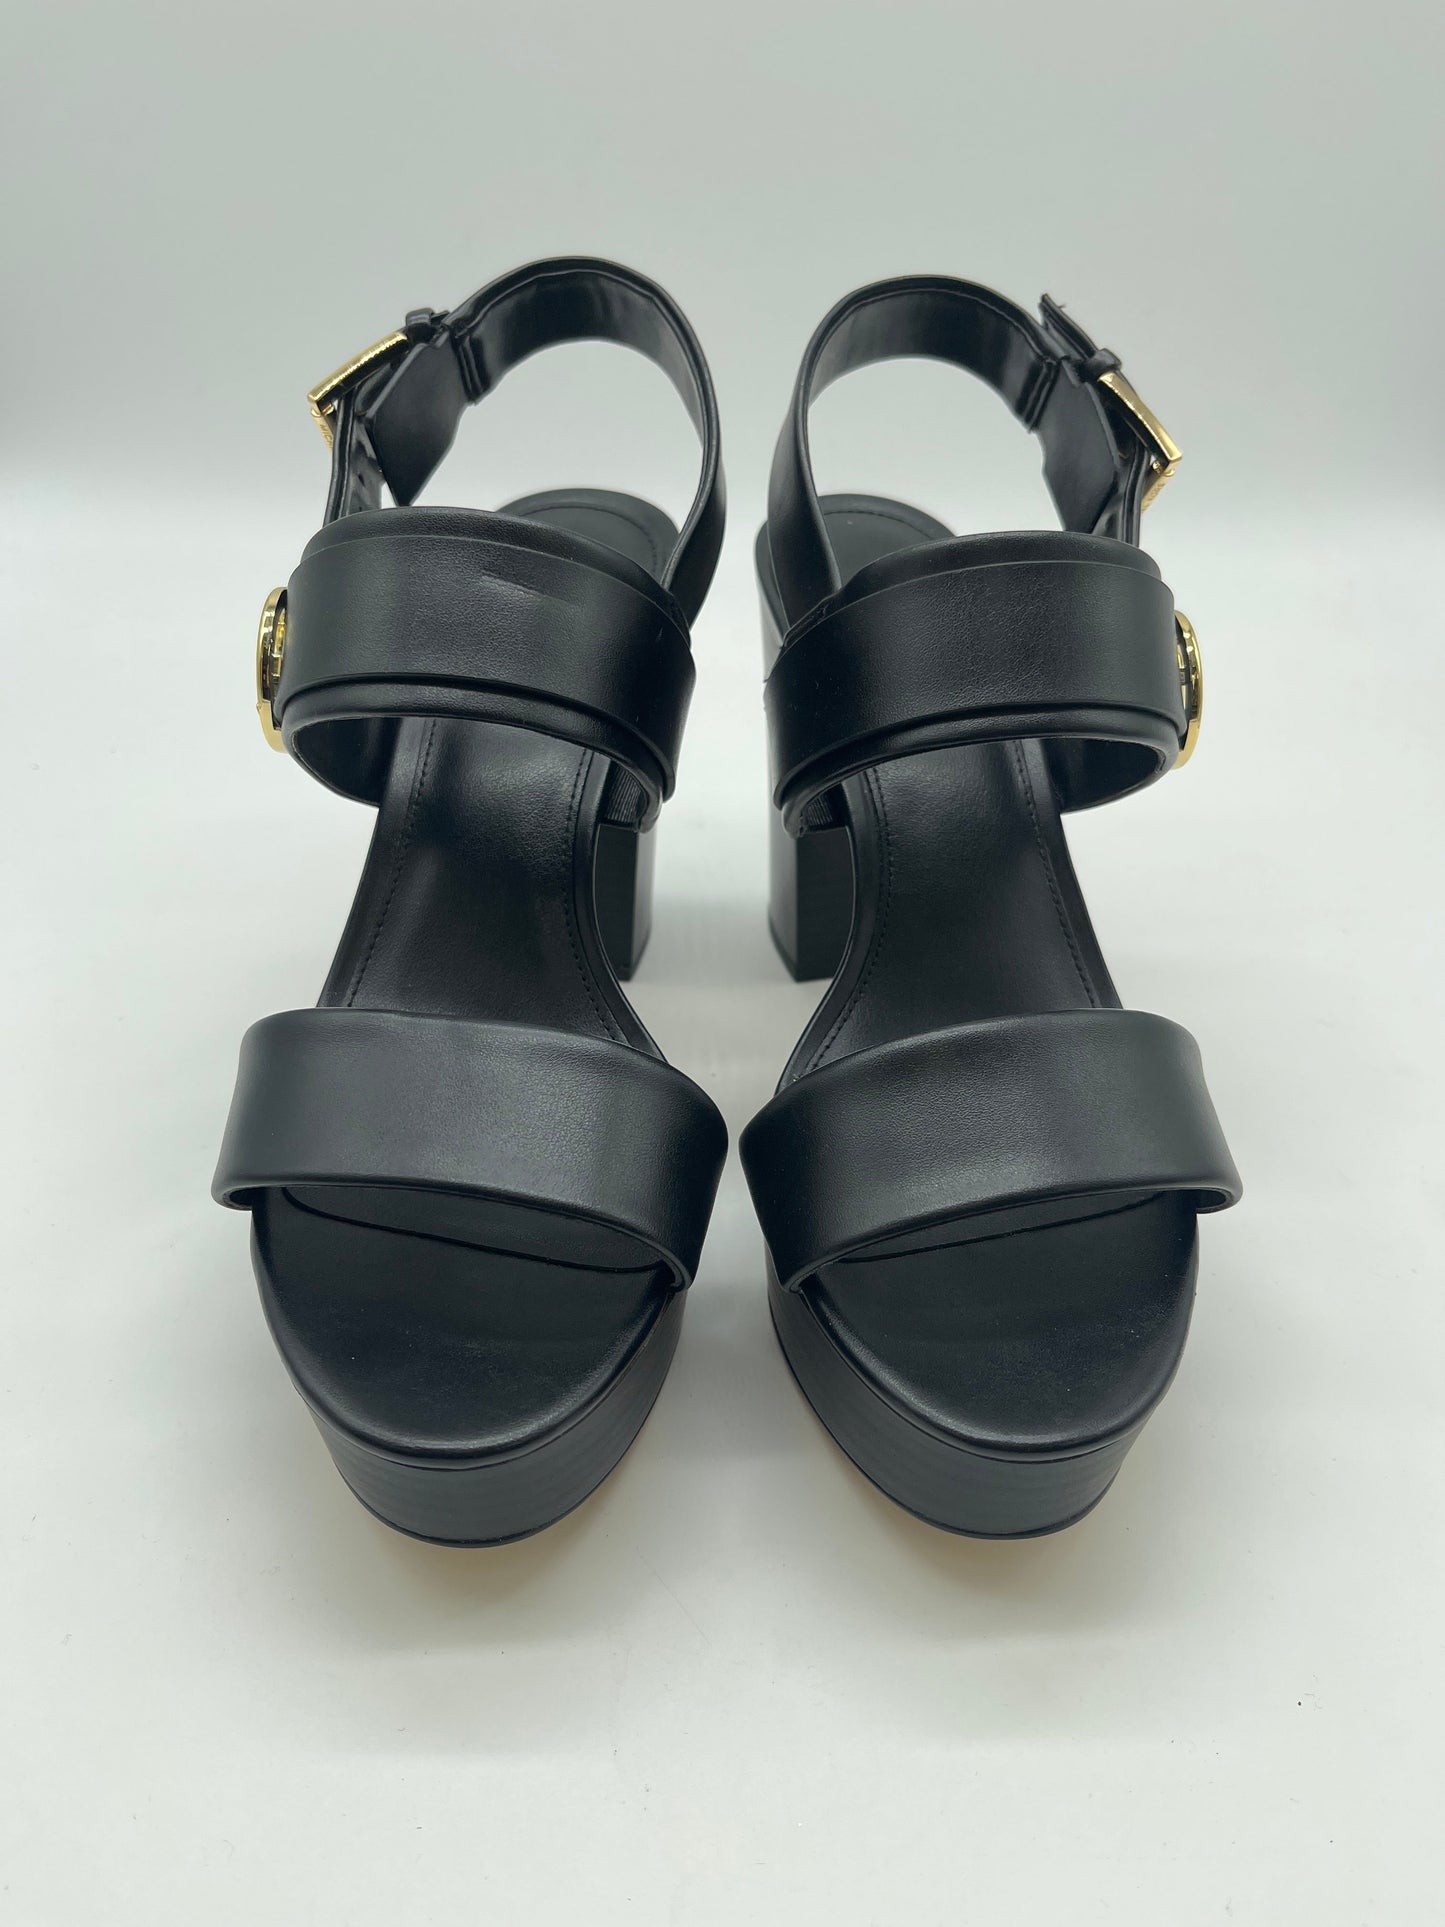 Black Sandals Heels Block Michael By Michael Kors, Size 6.5